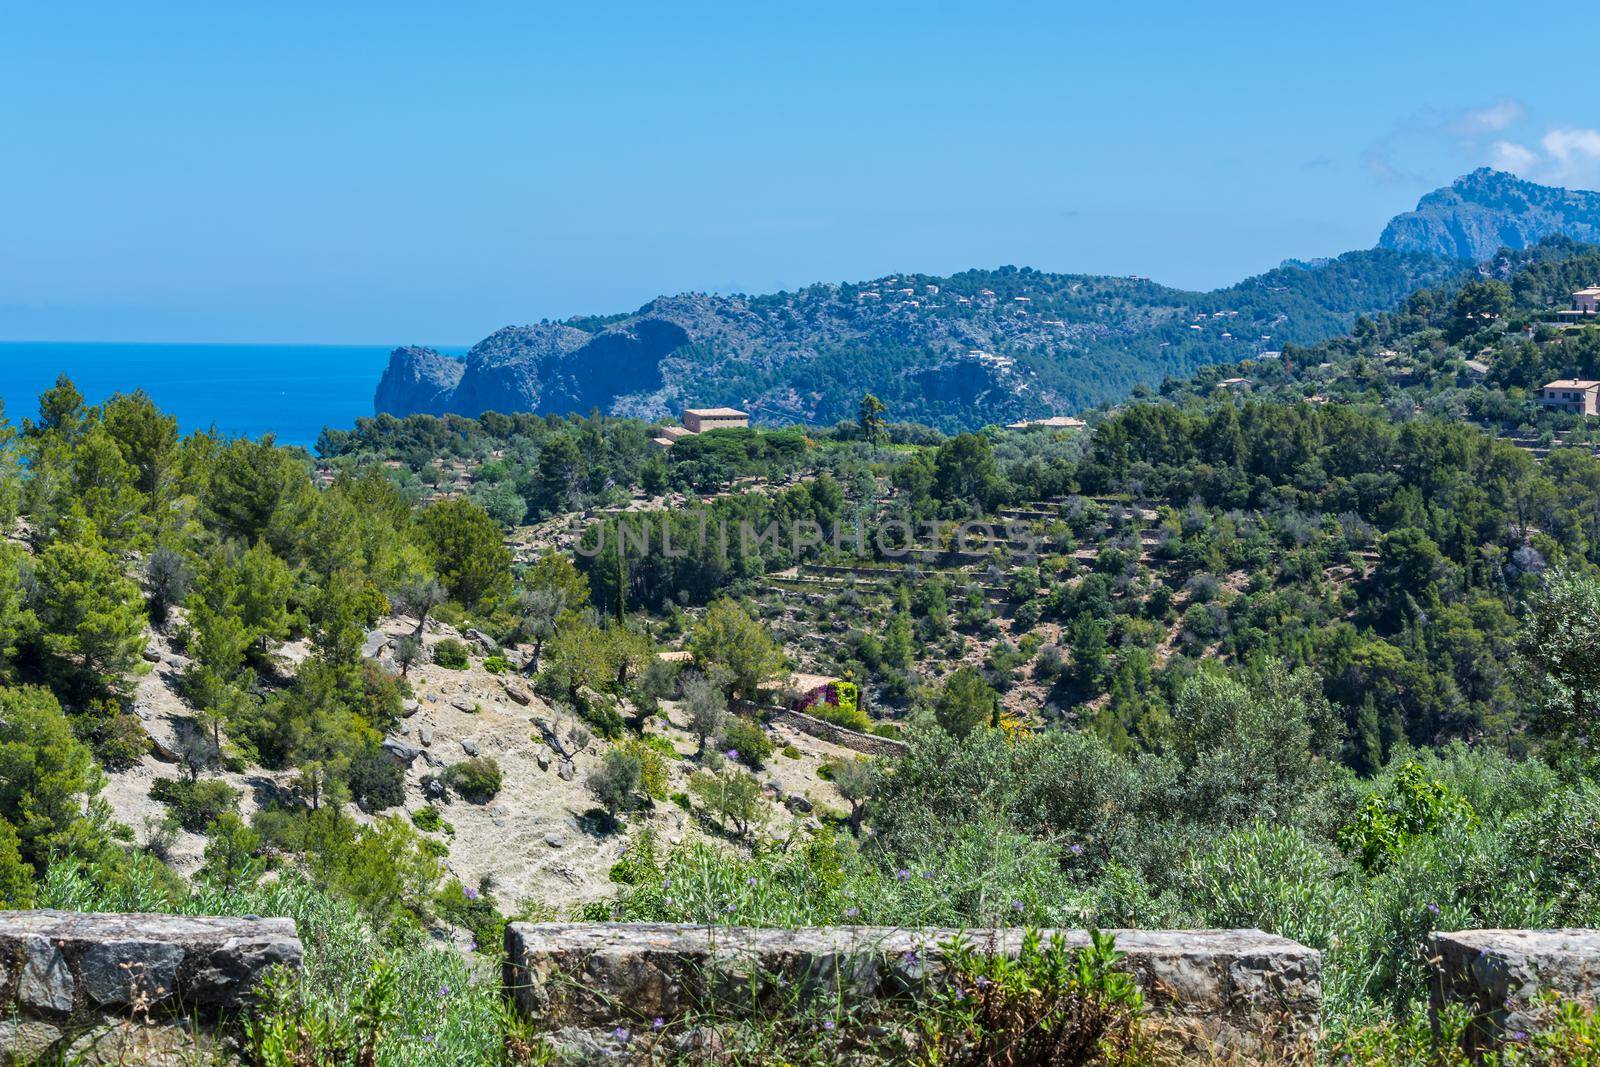 Wild West Coastline of Mallorca, Spain in the background the Mediterranean Sea.